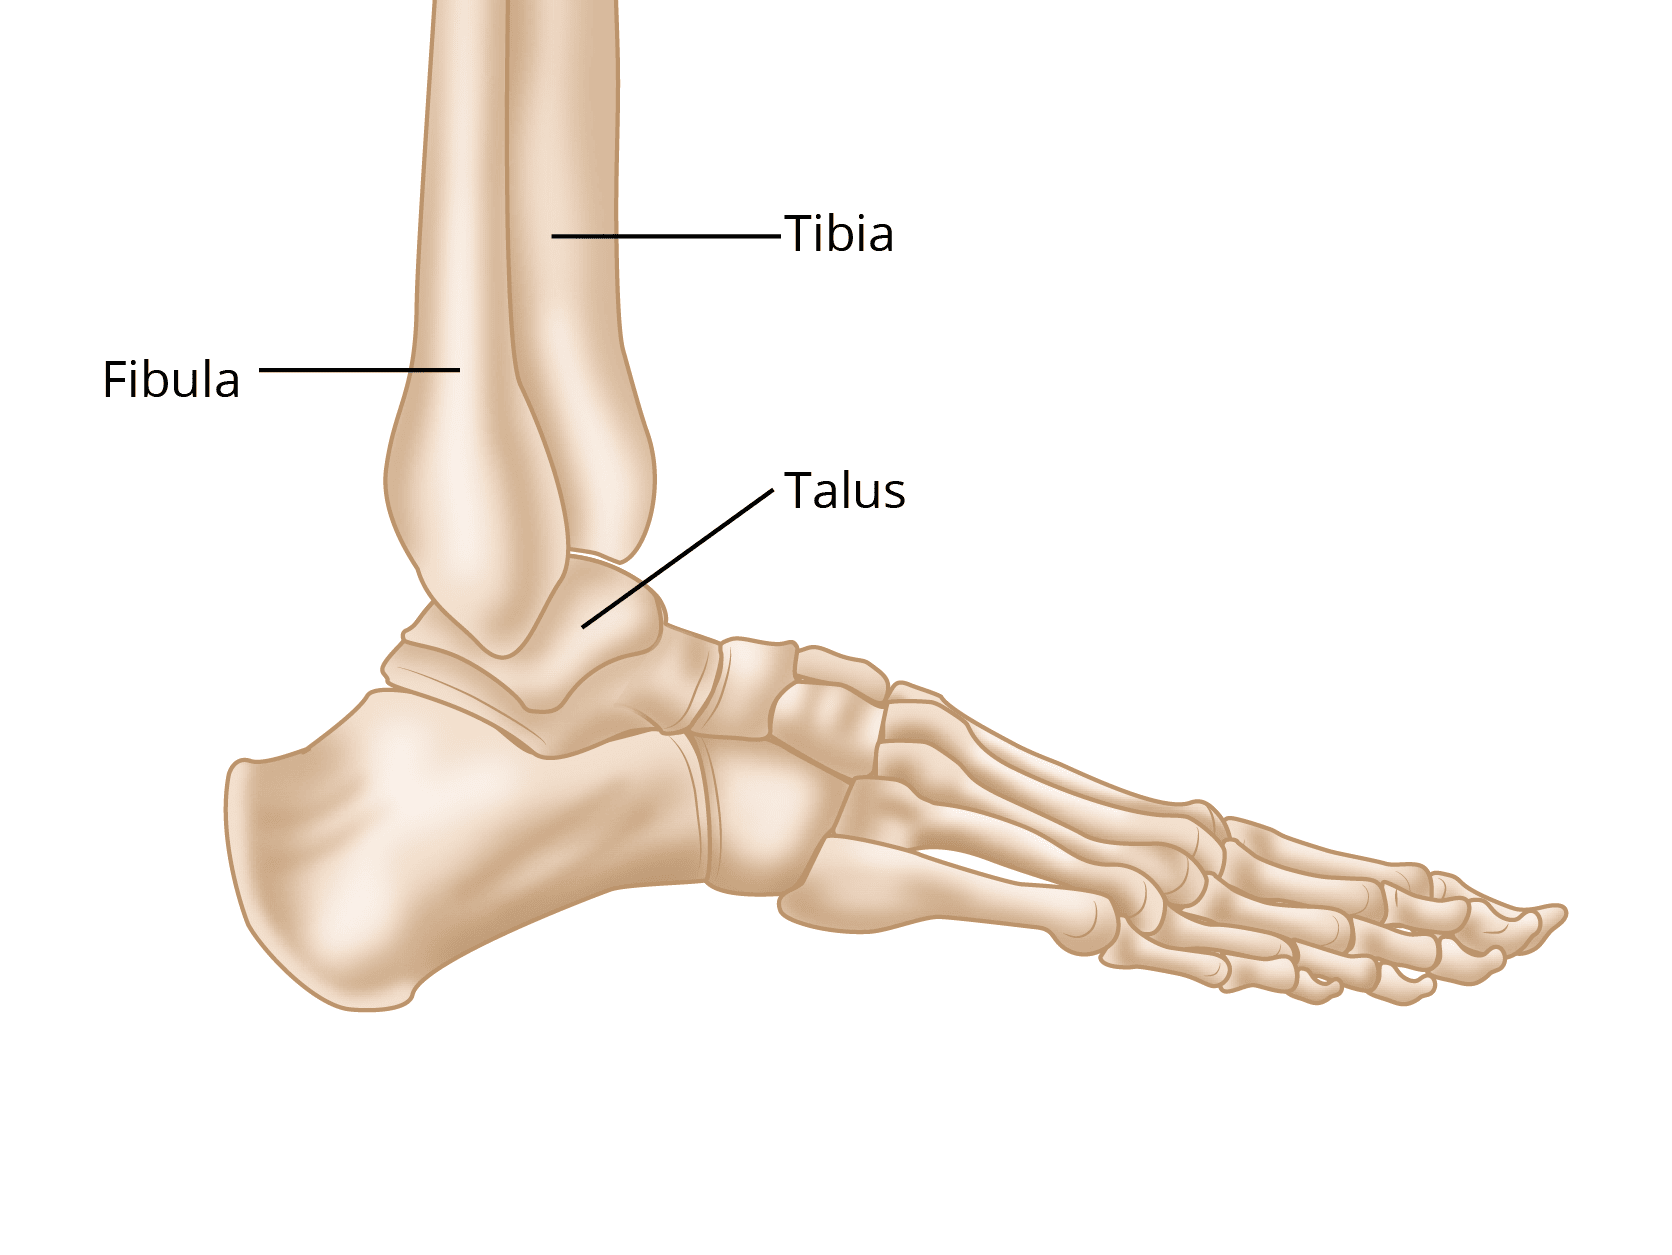 bakke Ingen Charles Keasing Ankle Fractures (Broken Ankle) - OrthoInfo - AAOS